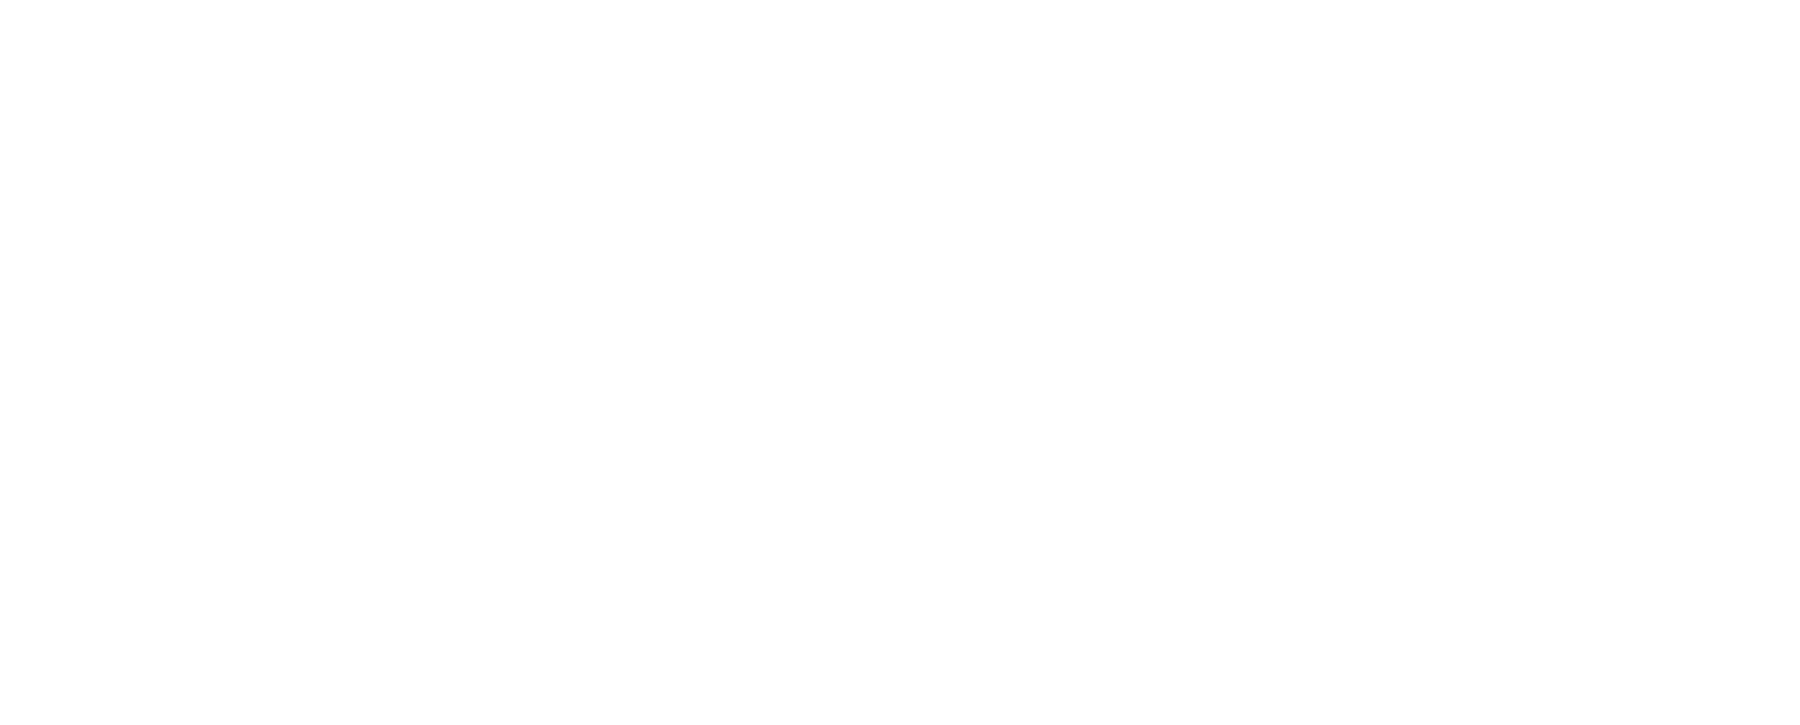 the open 2025 Authorised Provider logo